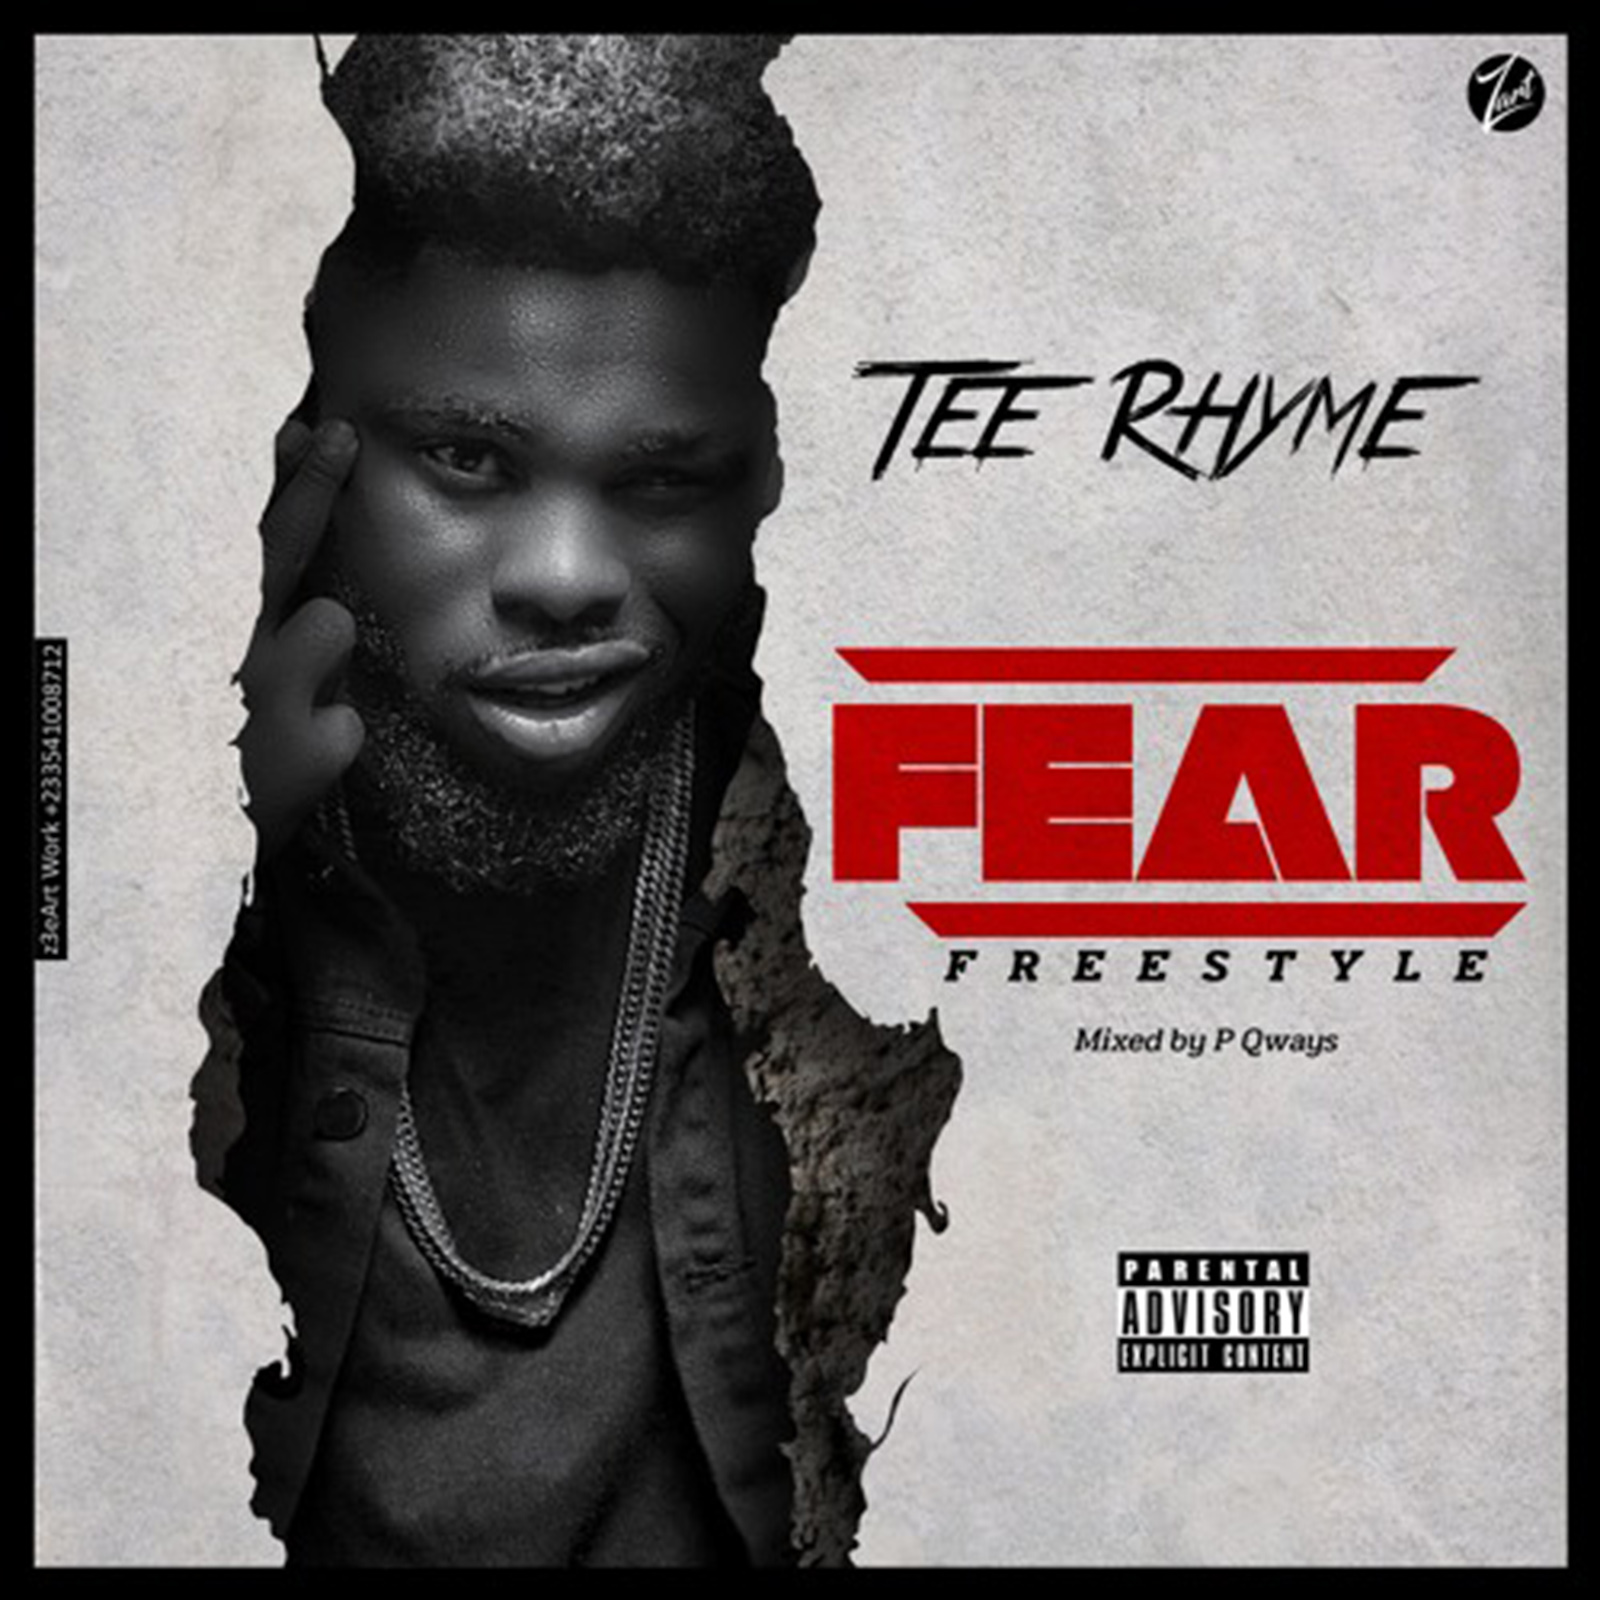 Fear by Tee Rhyme